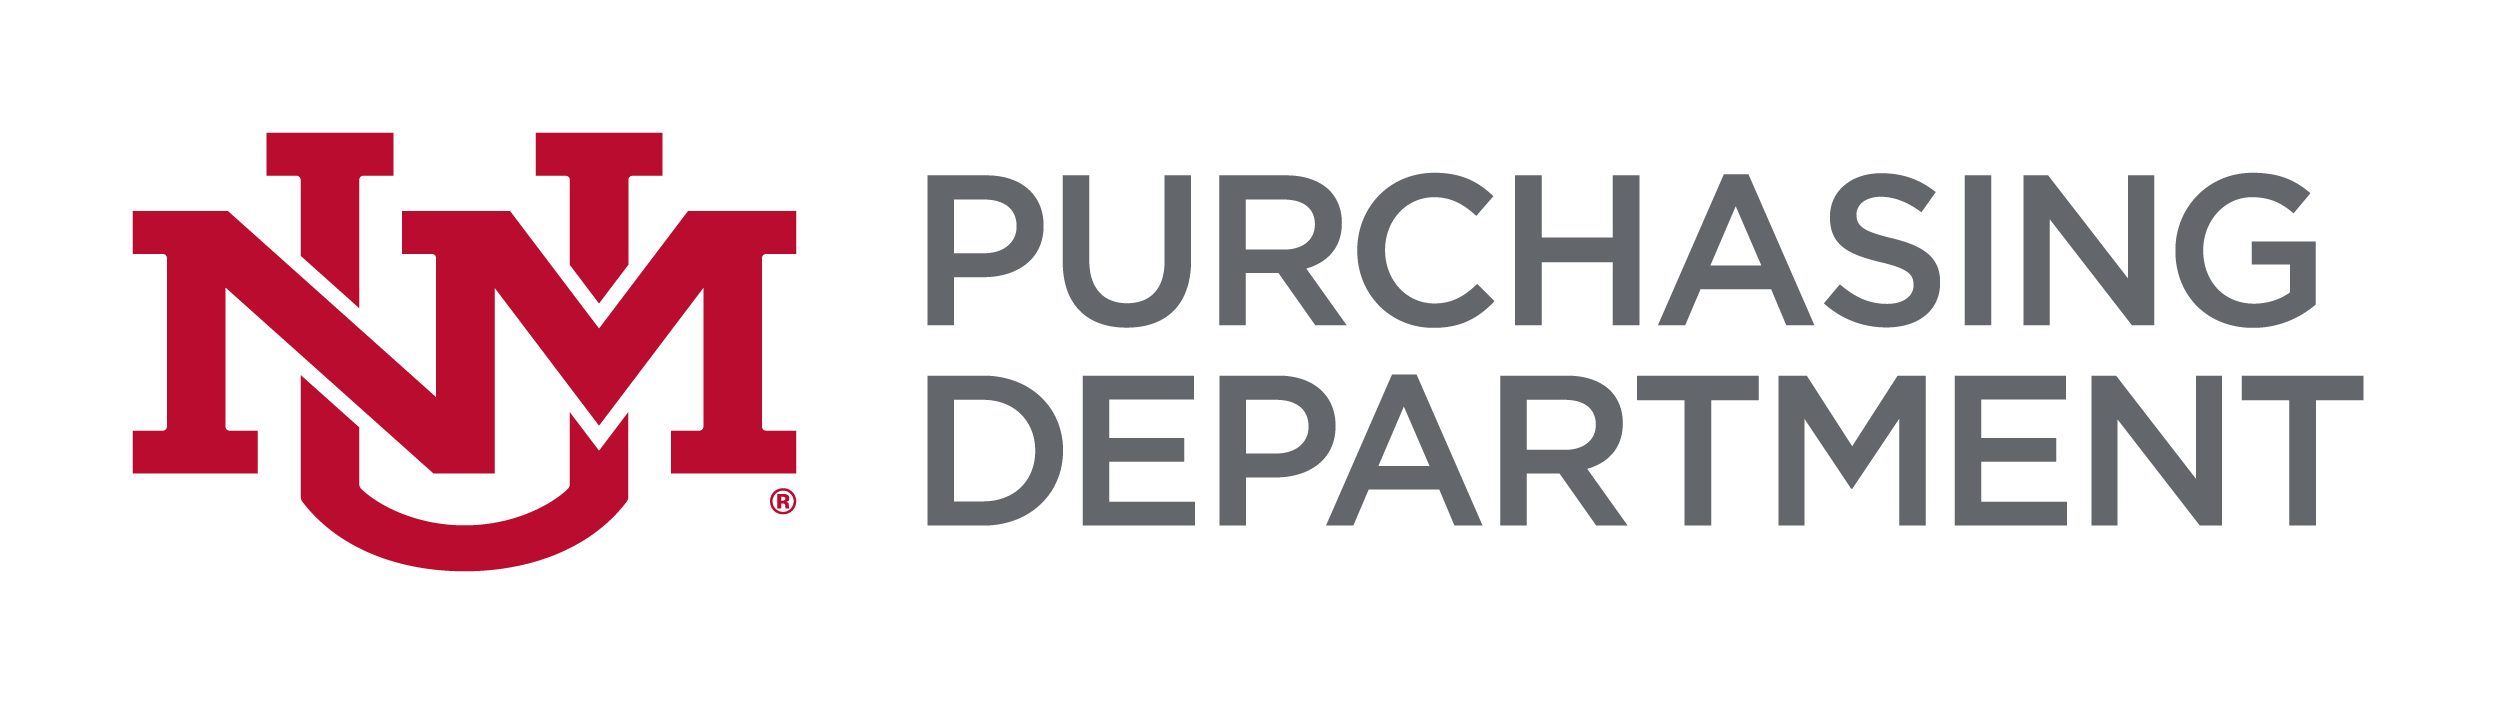 purch-dept-logo